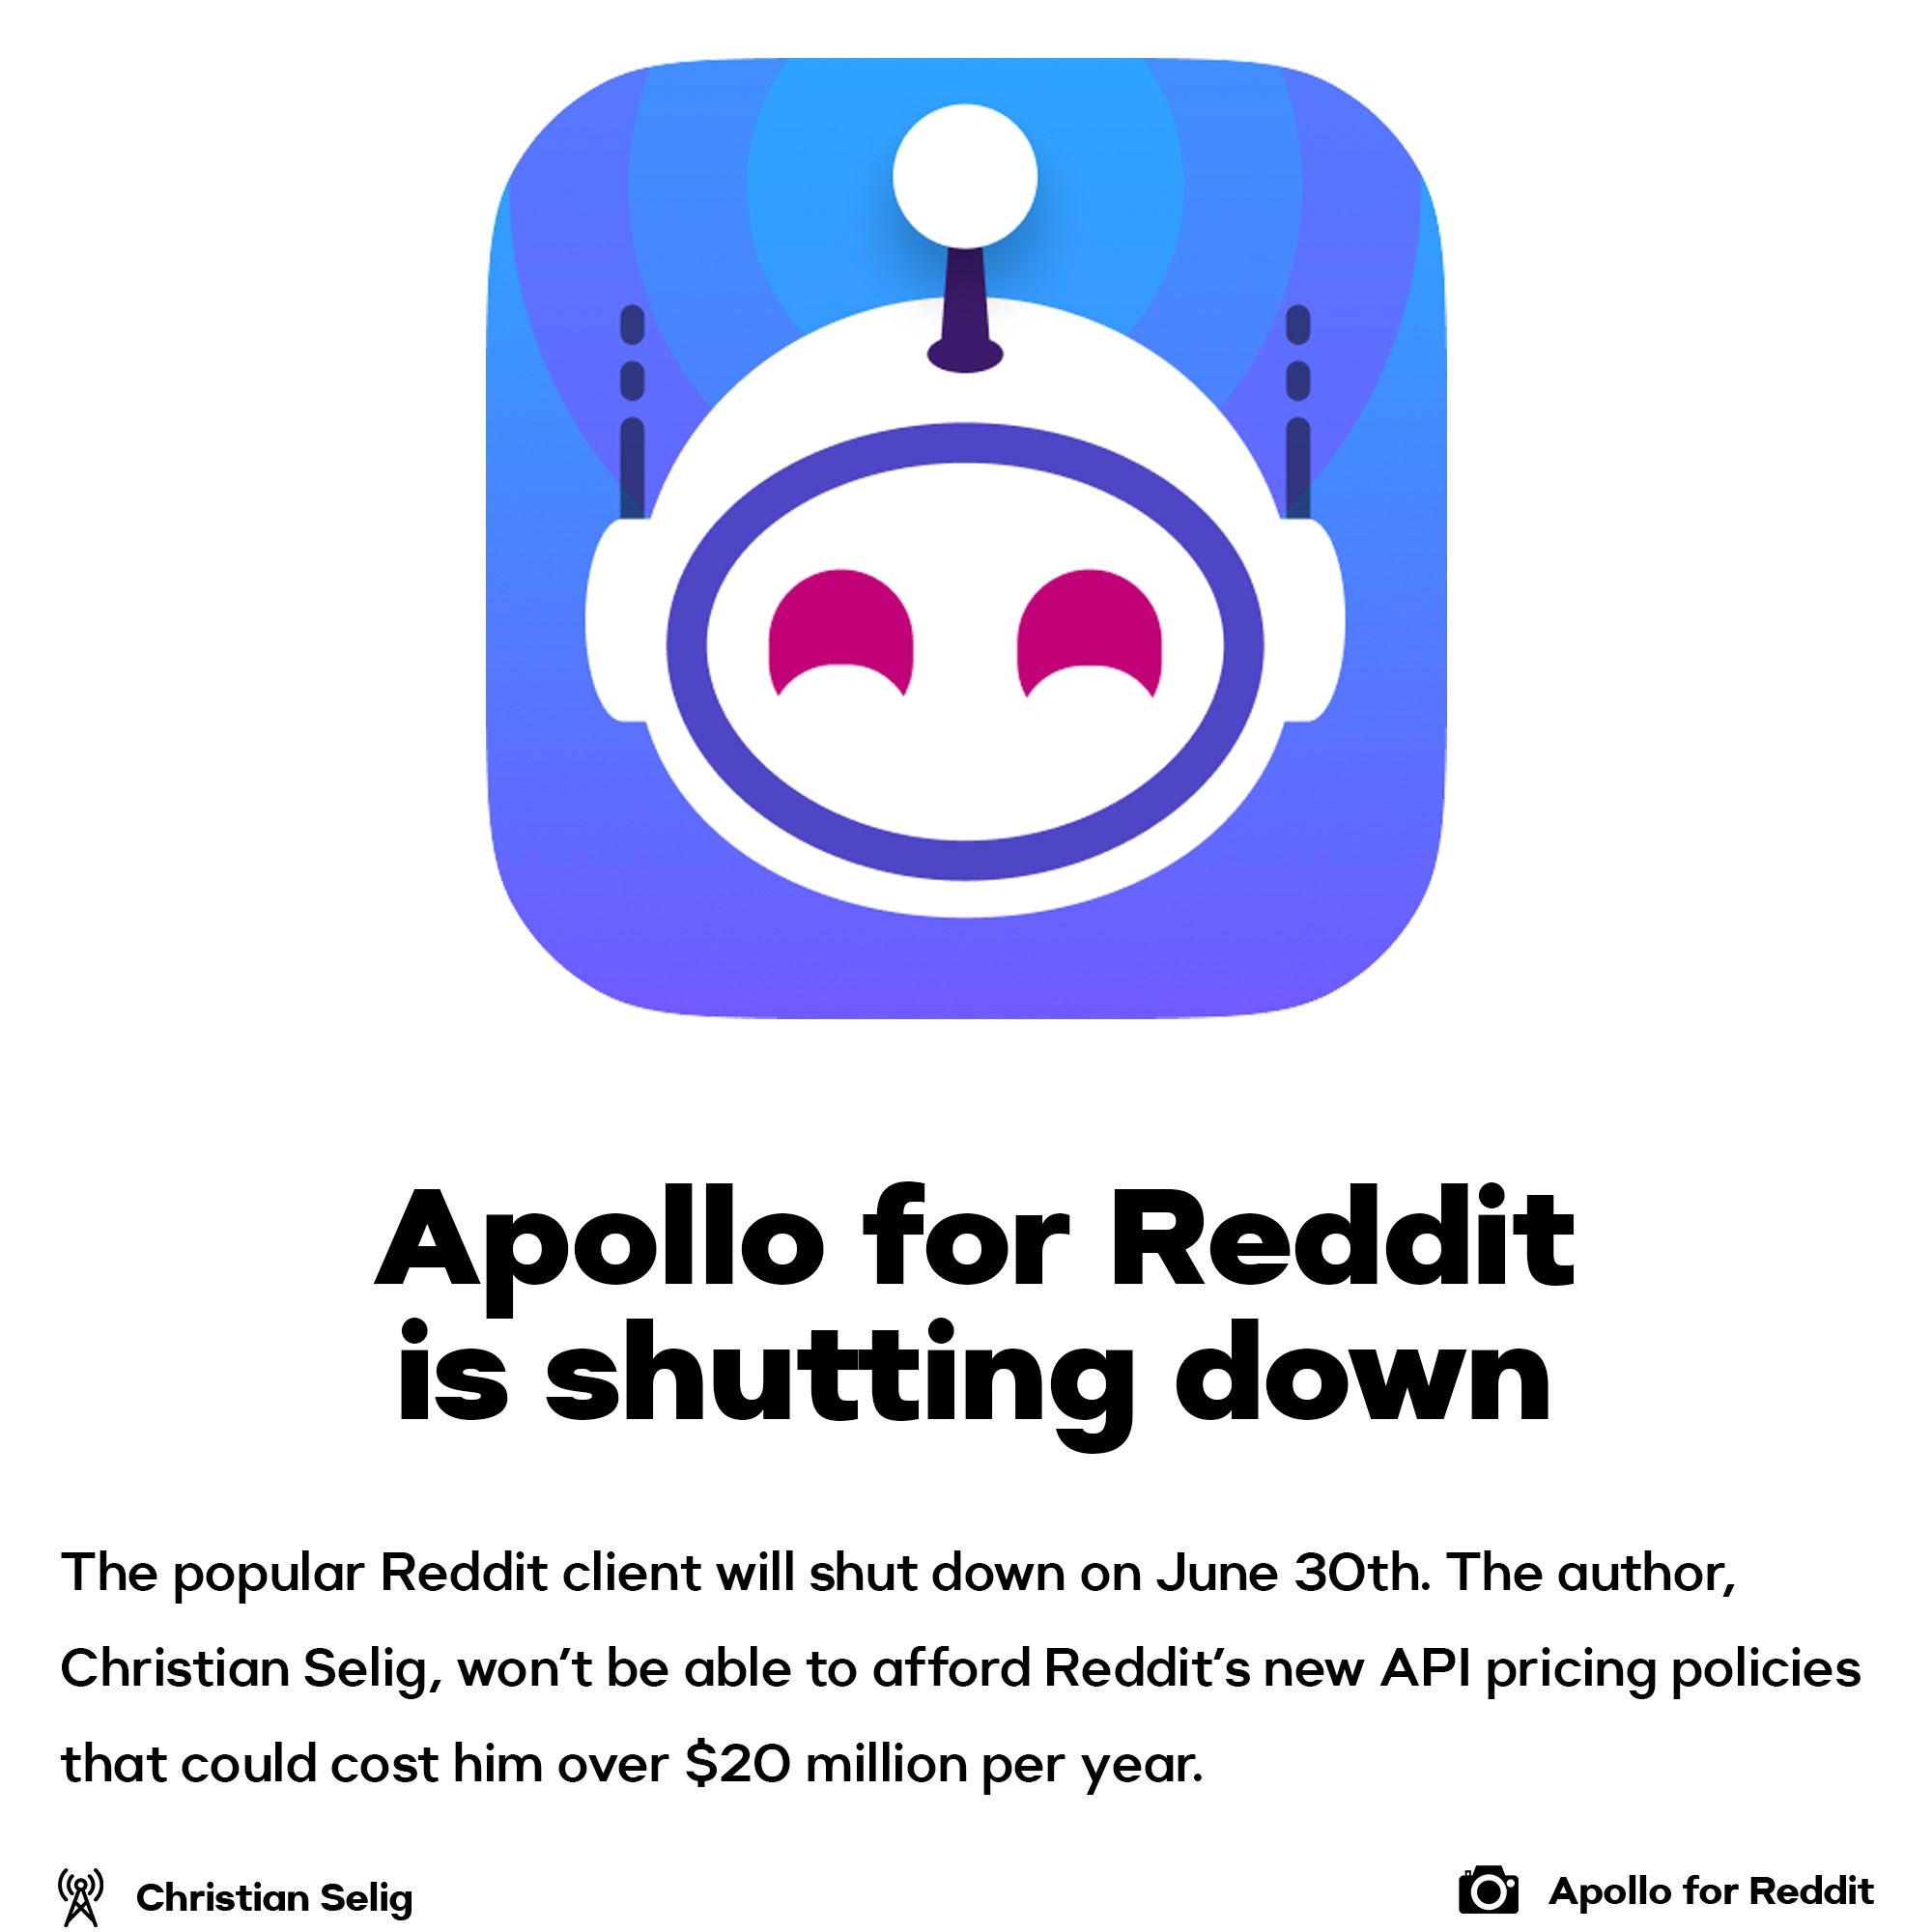 Apollo for Reddit is shutting down